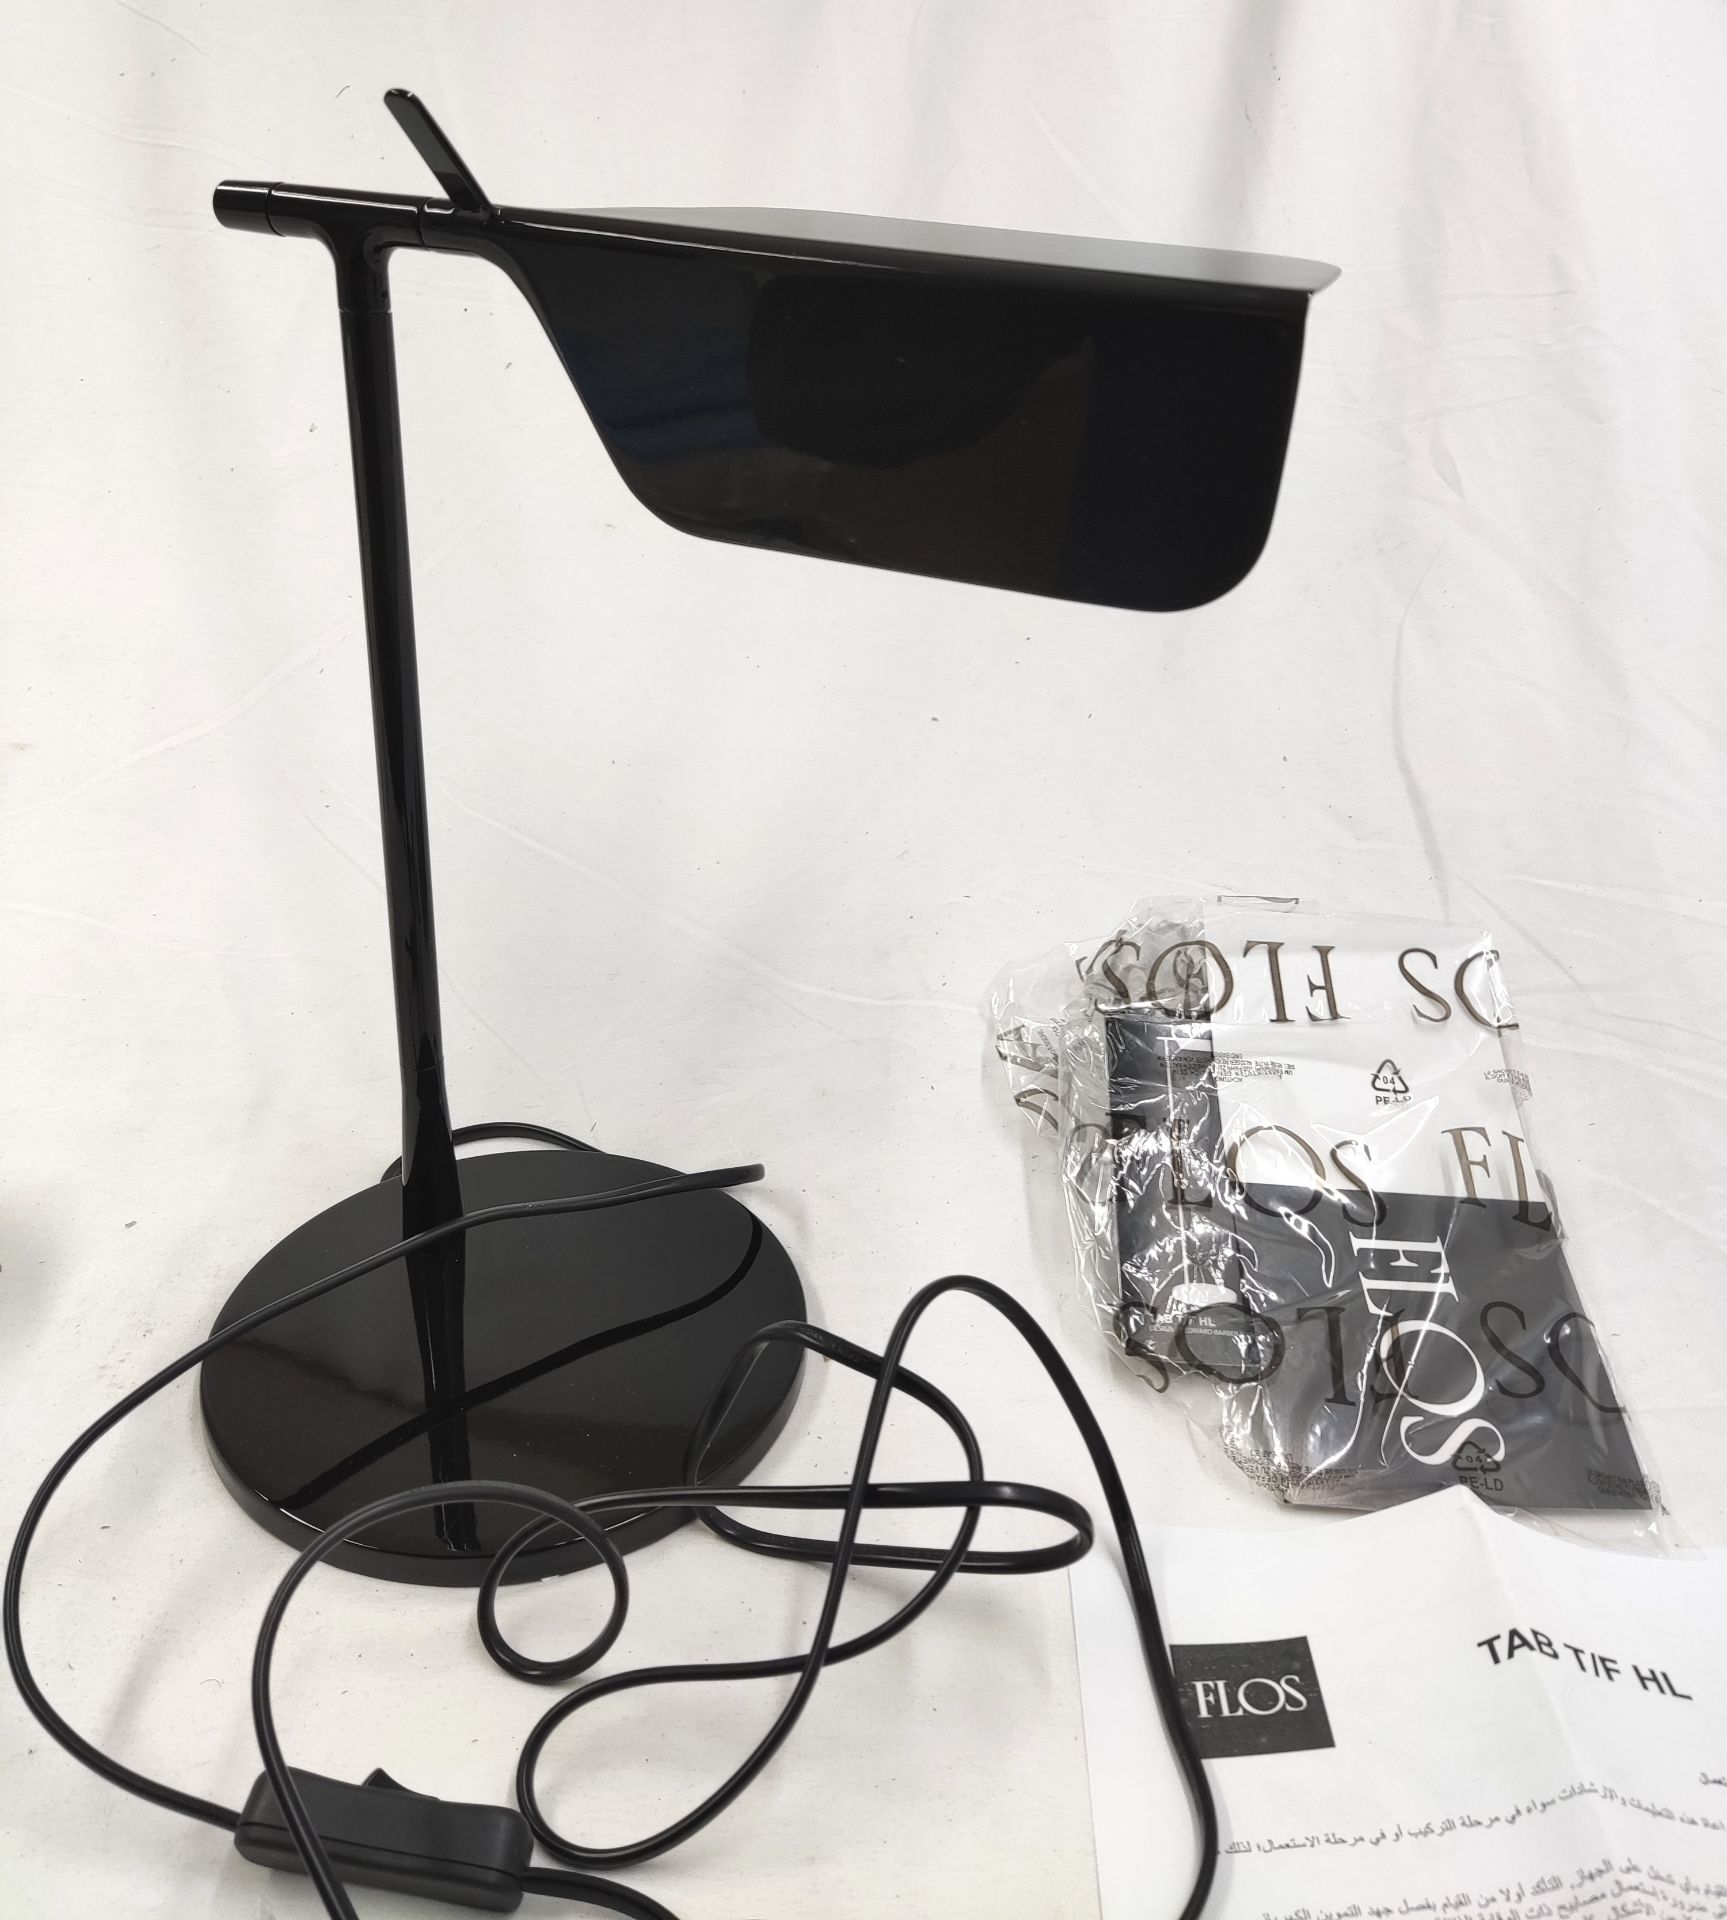 1 x FLOS Tab T Table Lamp With Adjustable Head - F6550330 - RRP £310 - Ref: ATR177-1/ATRPD - - Image 12 of 12